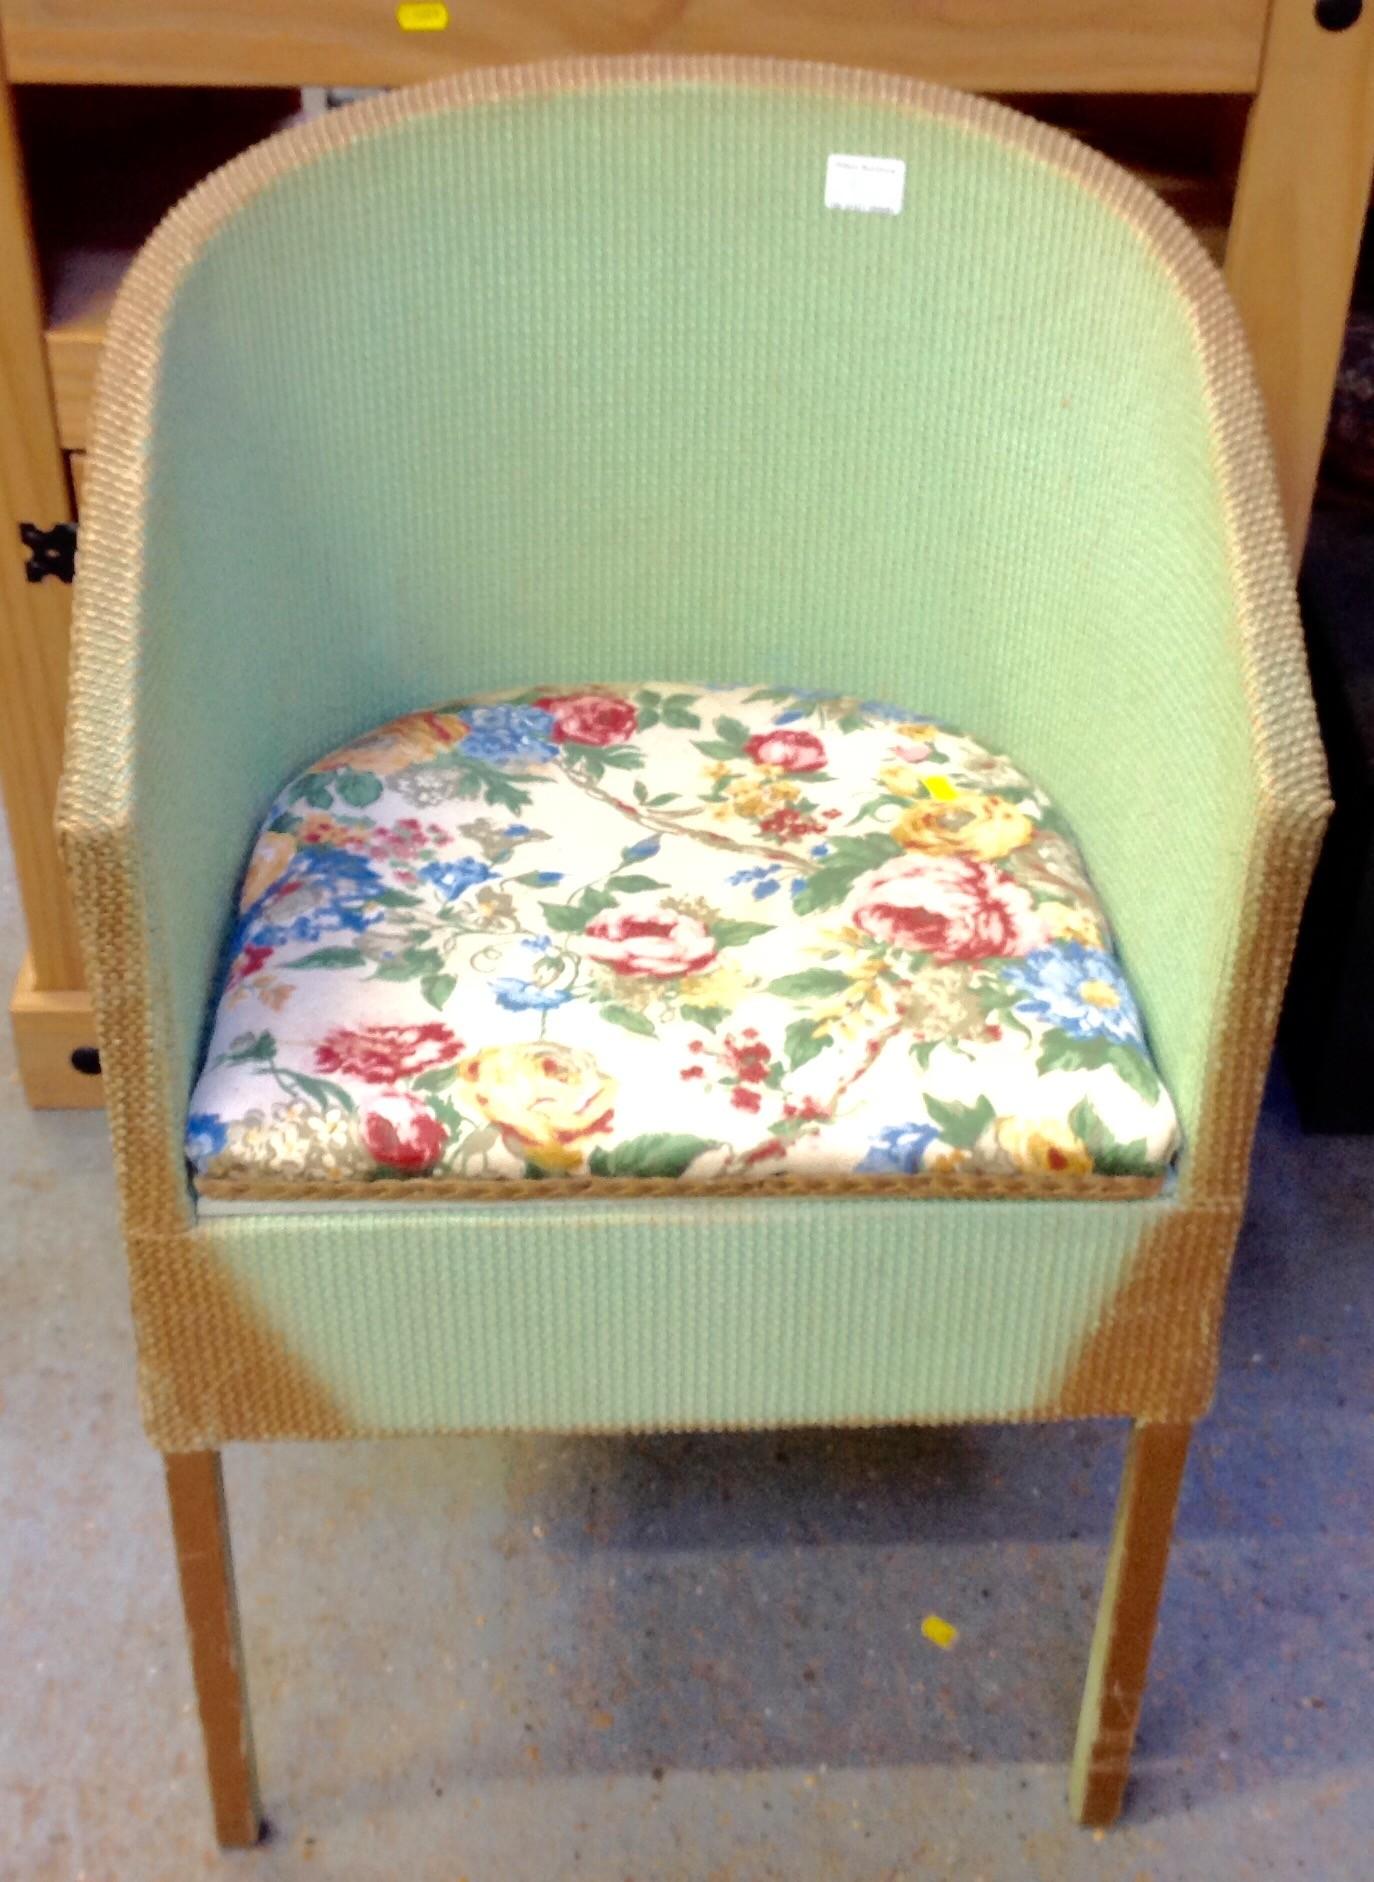 Loom Chair